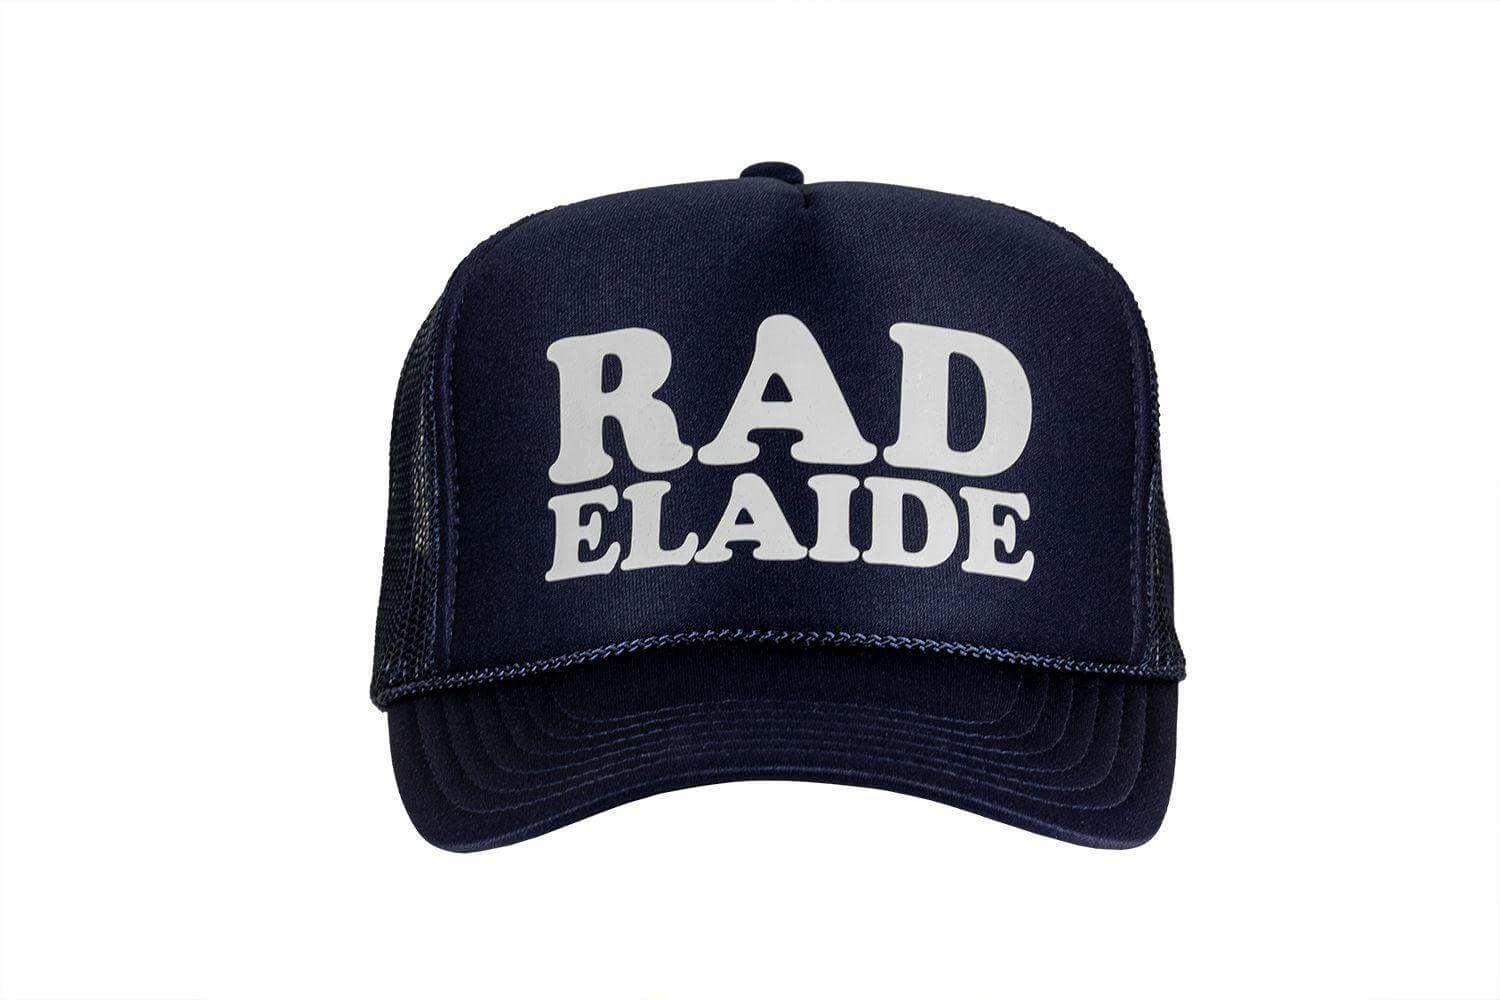 Adelaide high crown trucker cap with mesh back and snapback  - Tropic Trucker Australia®